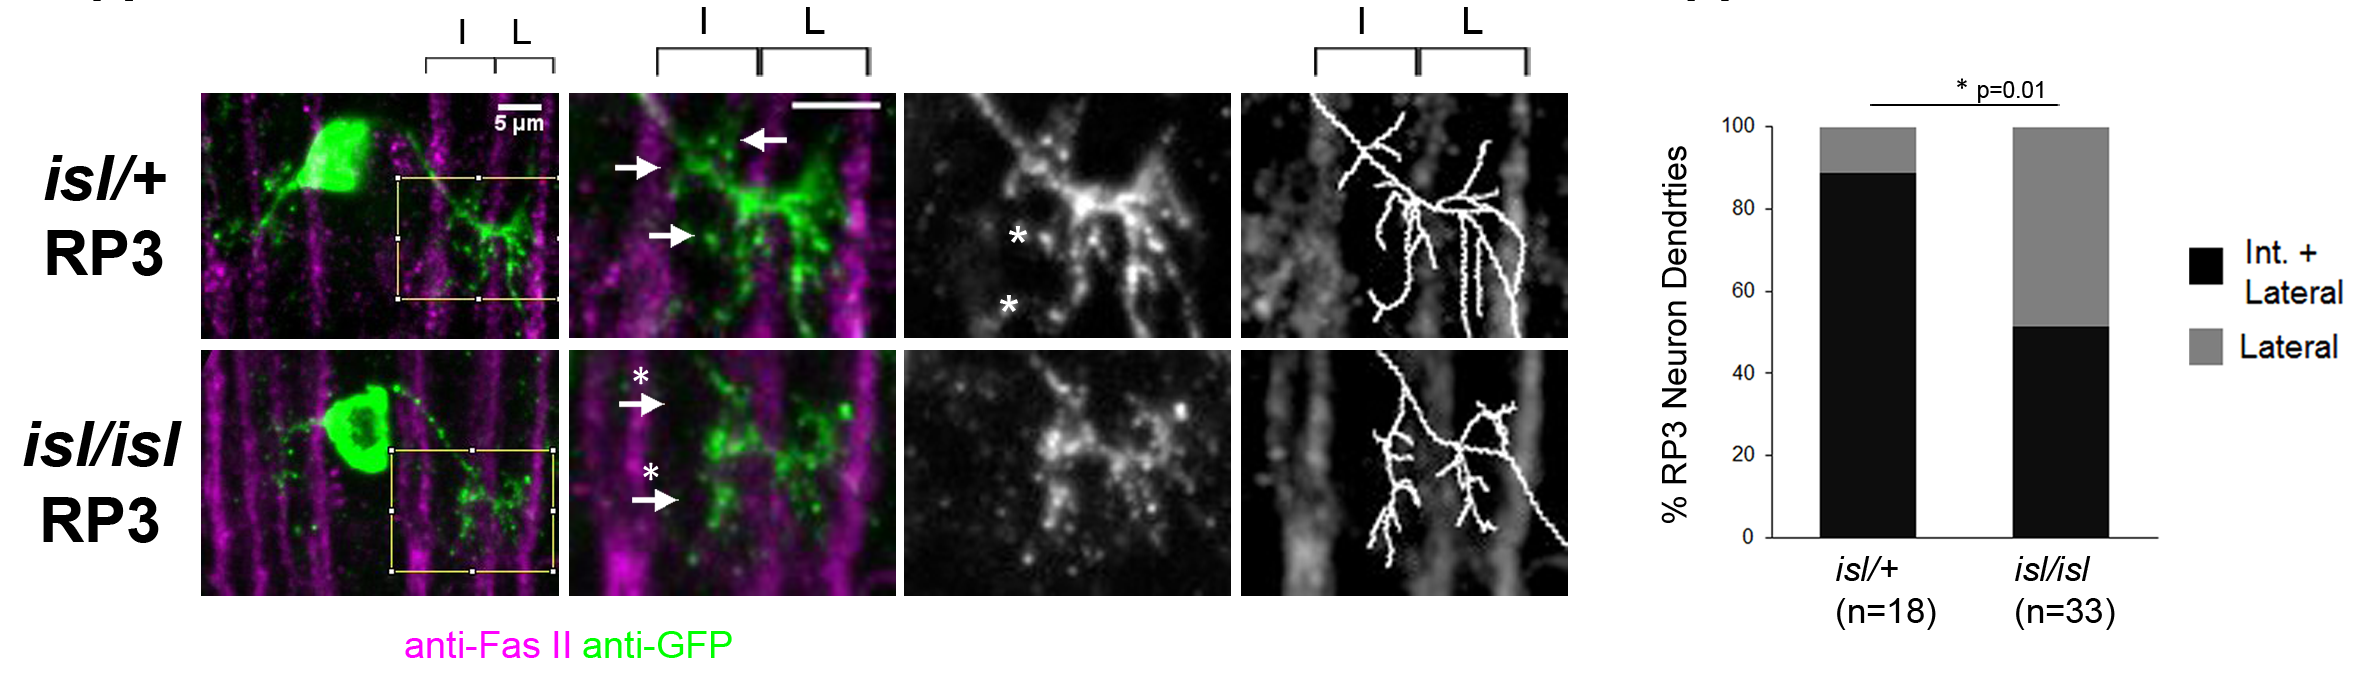 Single motor neuron labeling reveals dendritic architecture